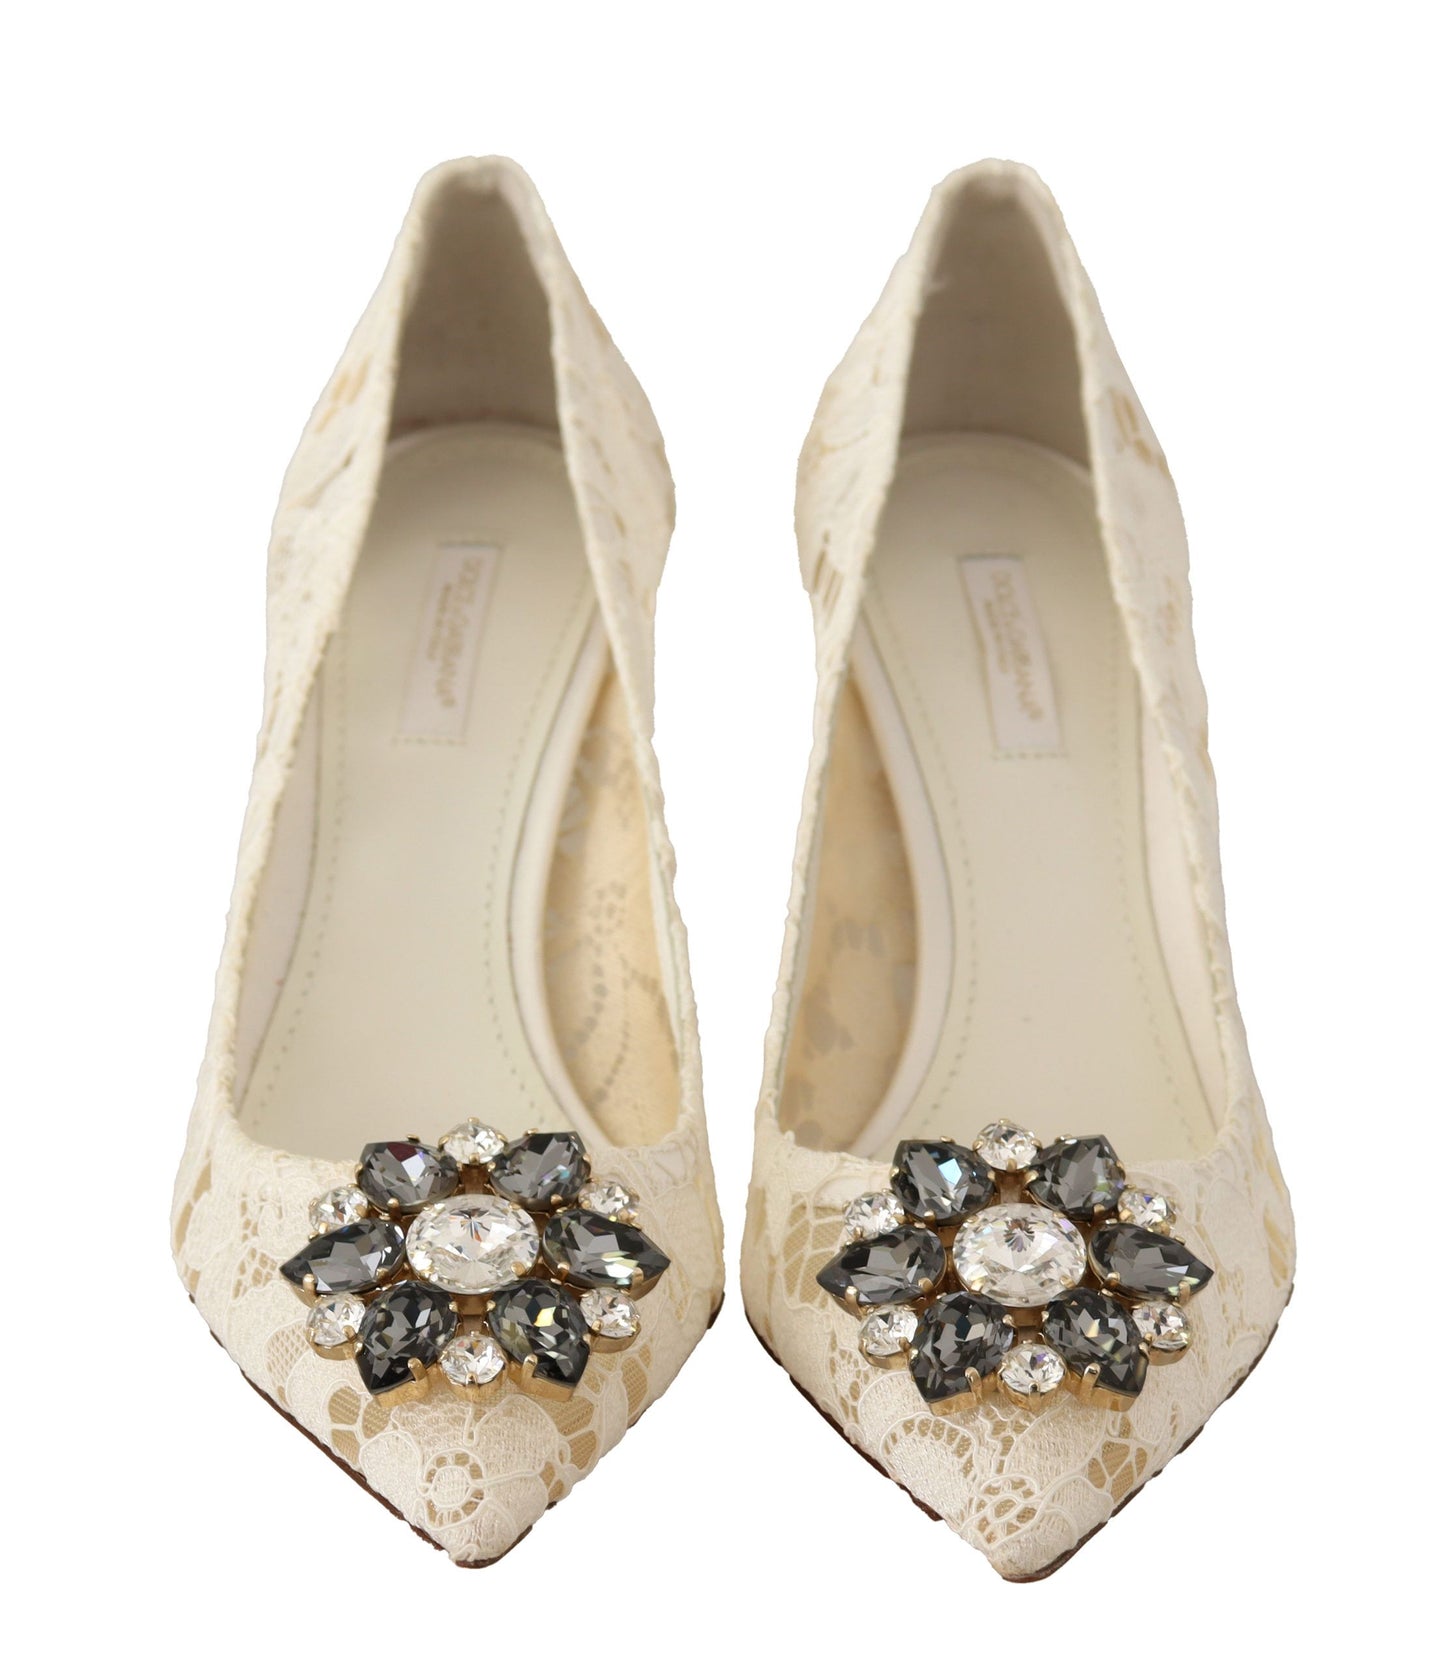 Elegant White Lace Heels with Crystal Embellishment